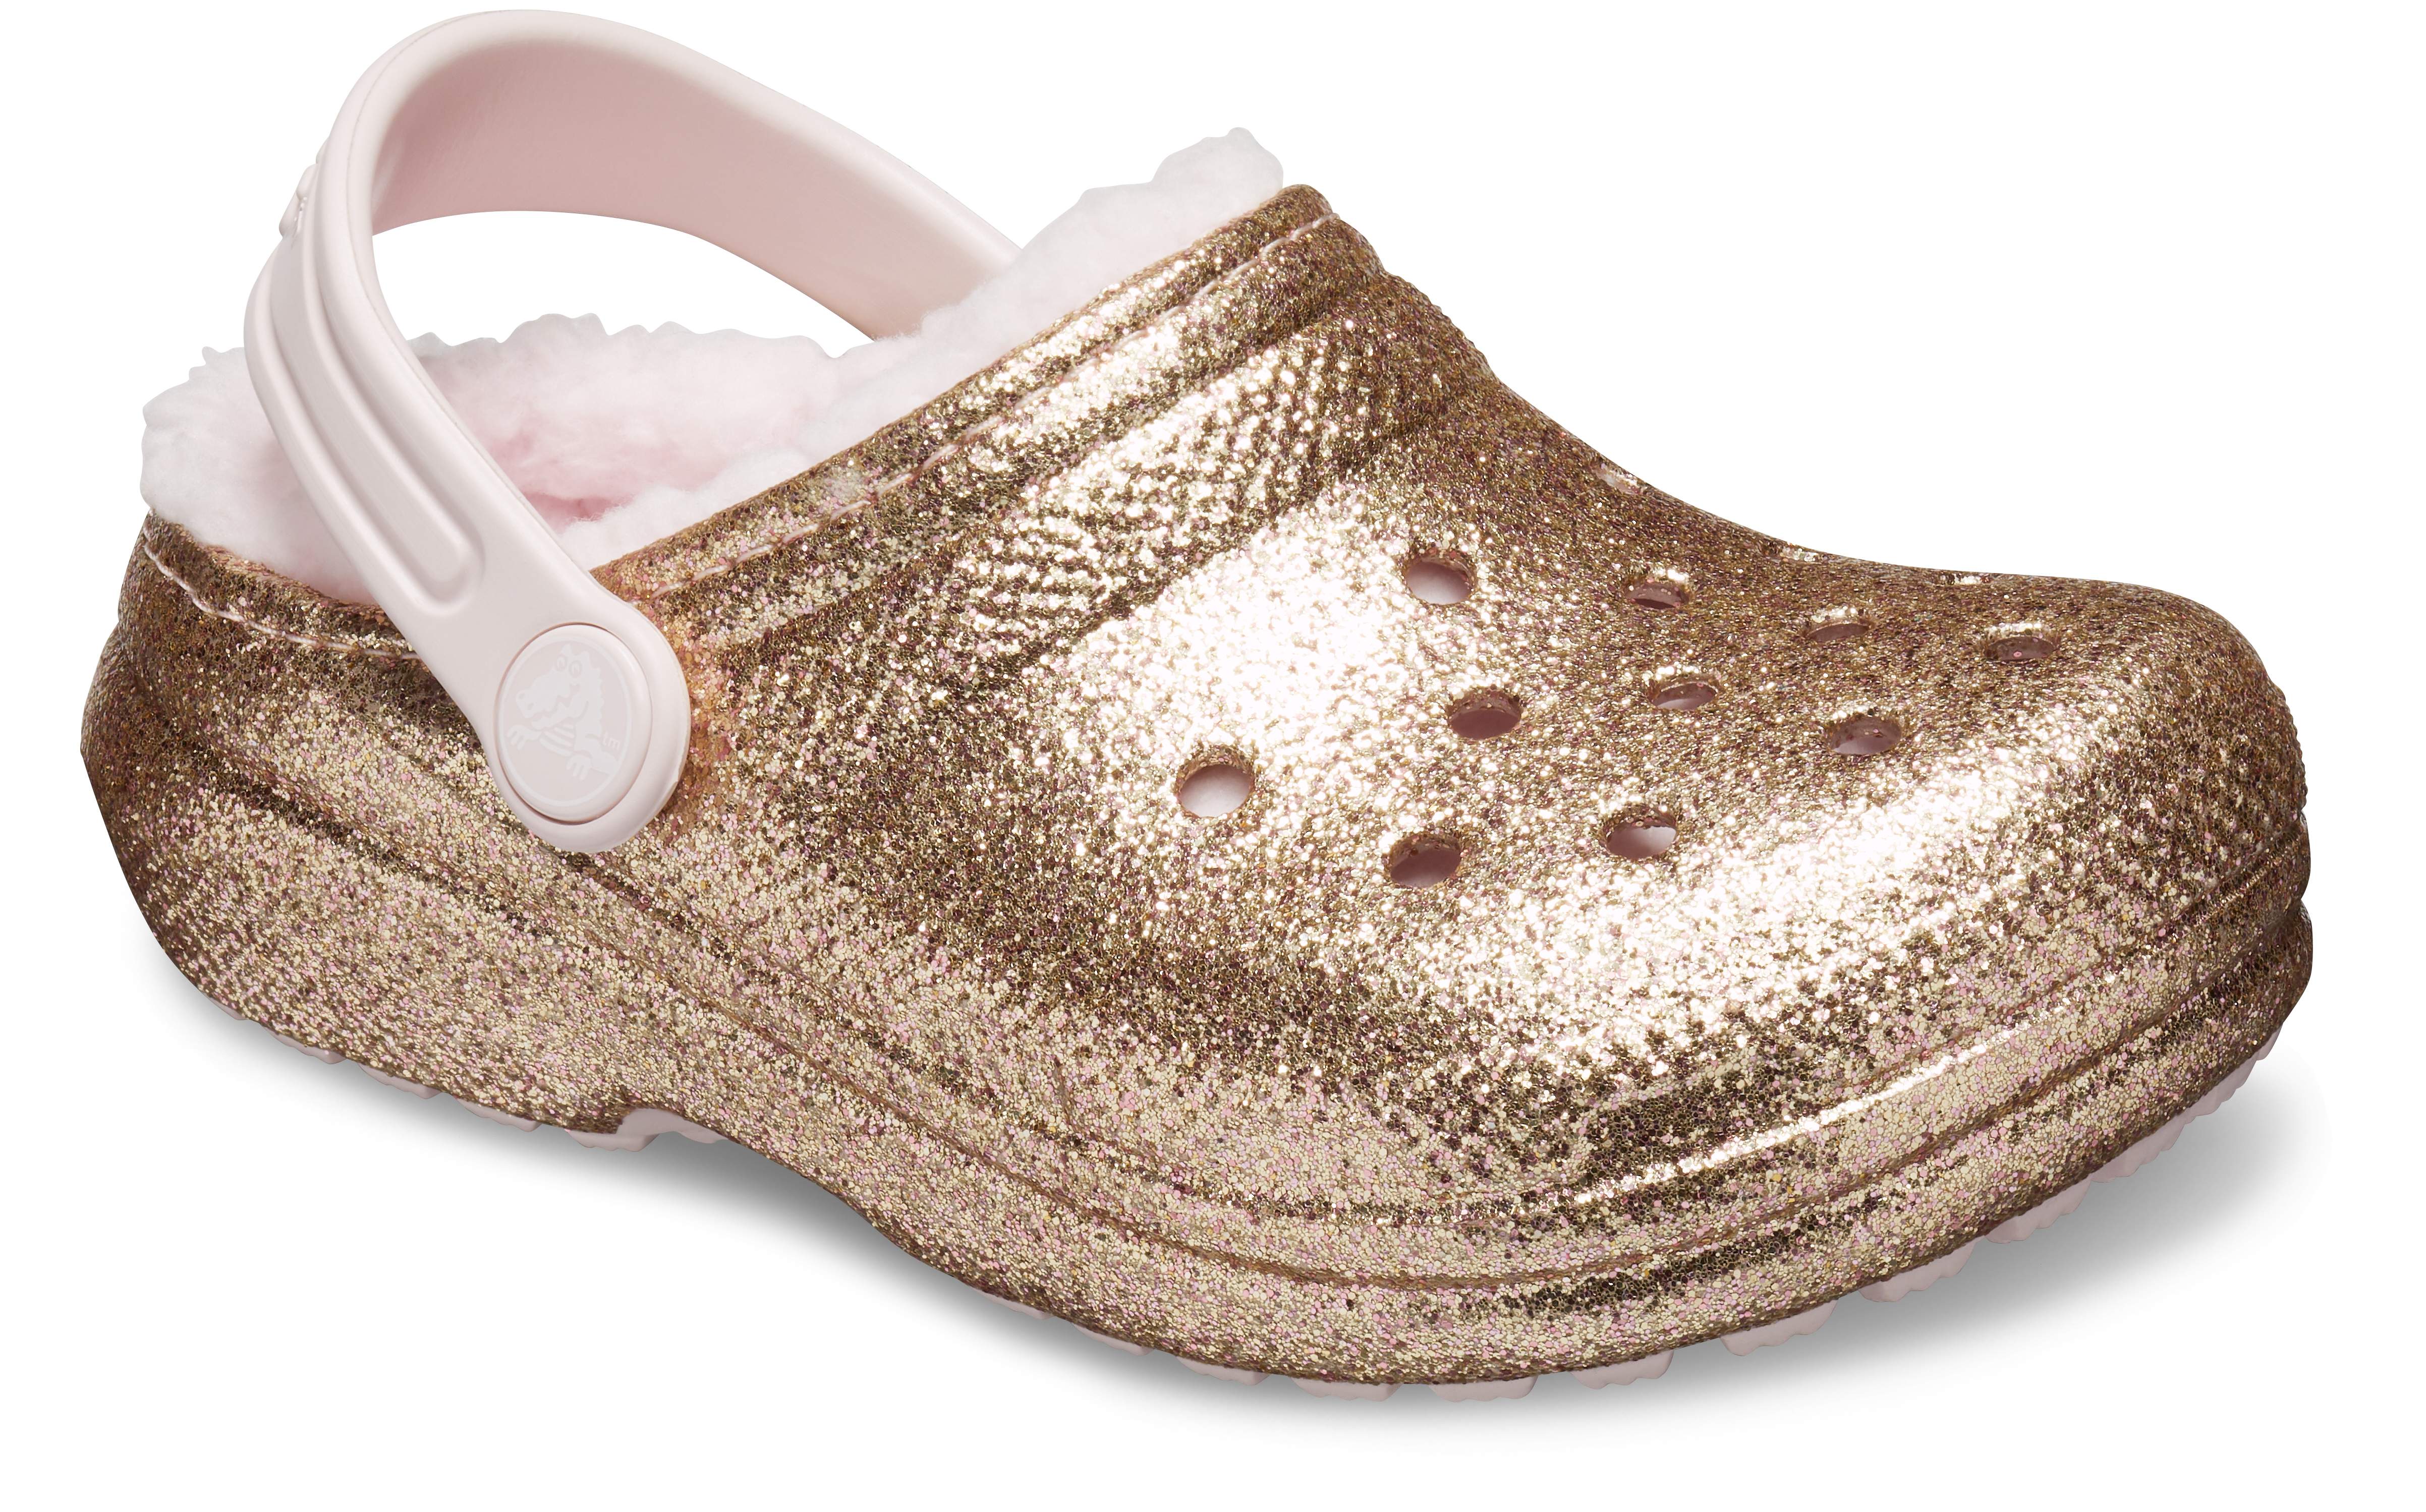 ballerina pink crocs with fur